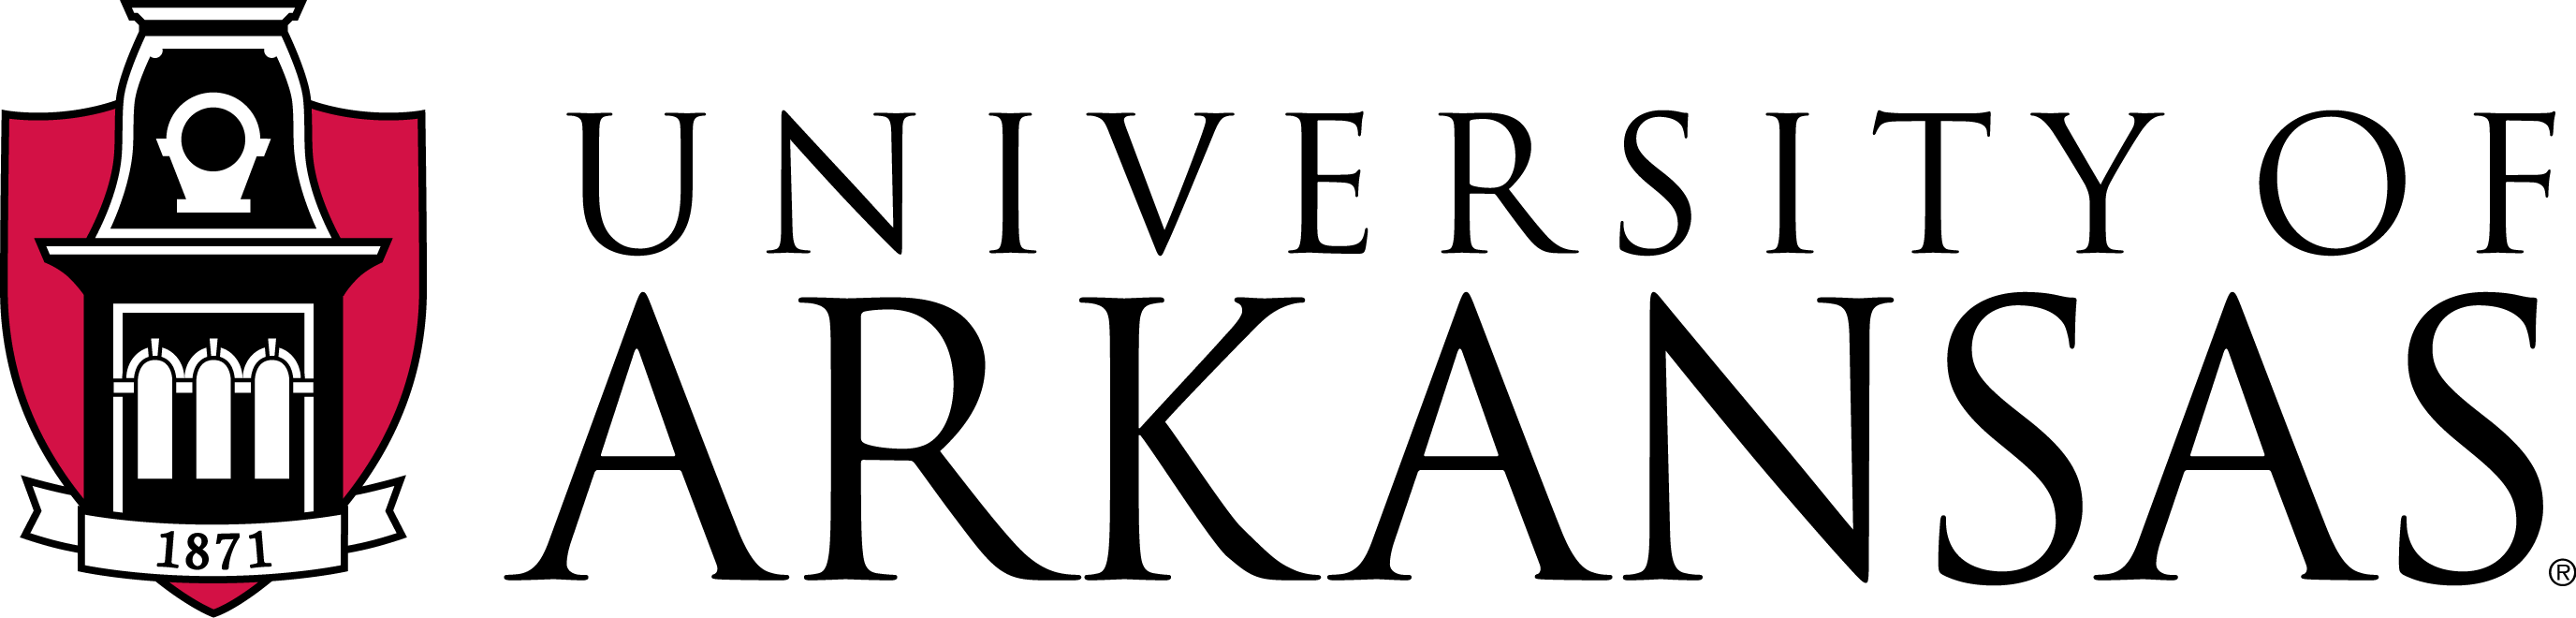 arkansas university logo